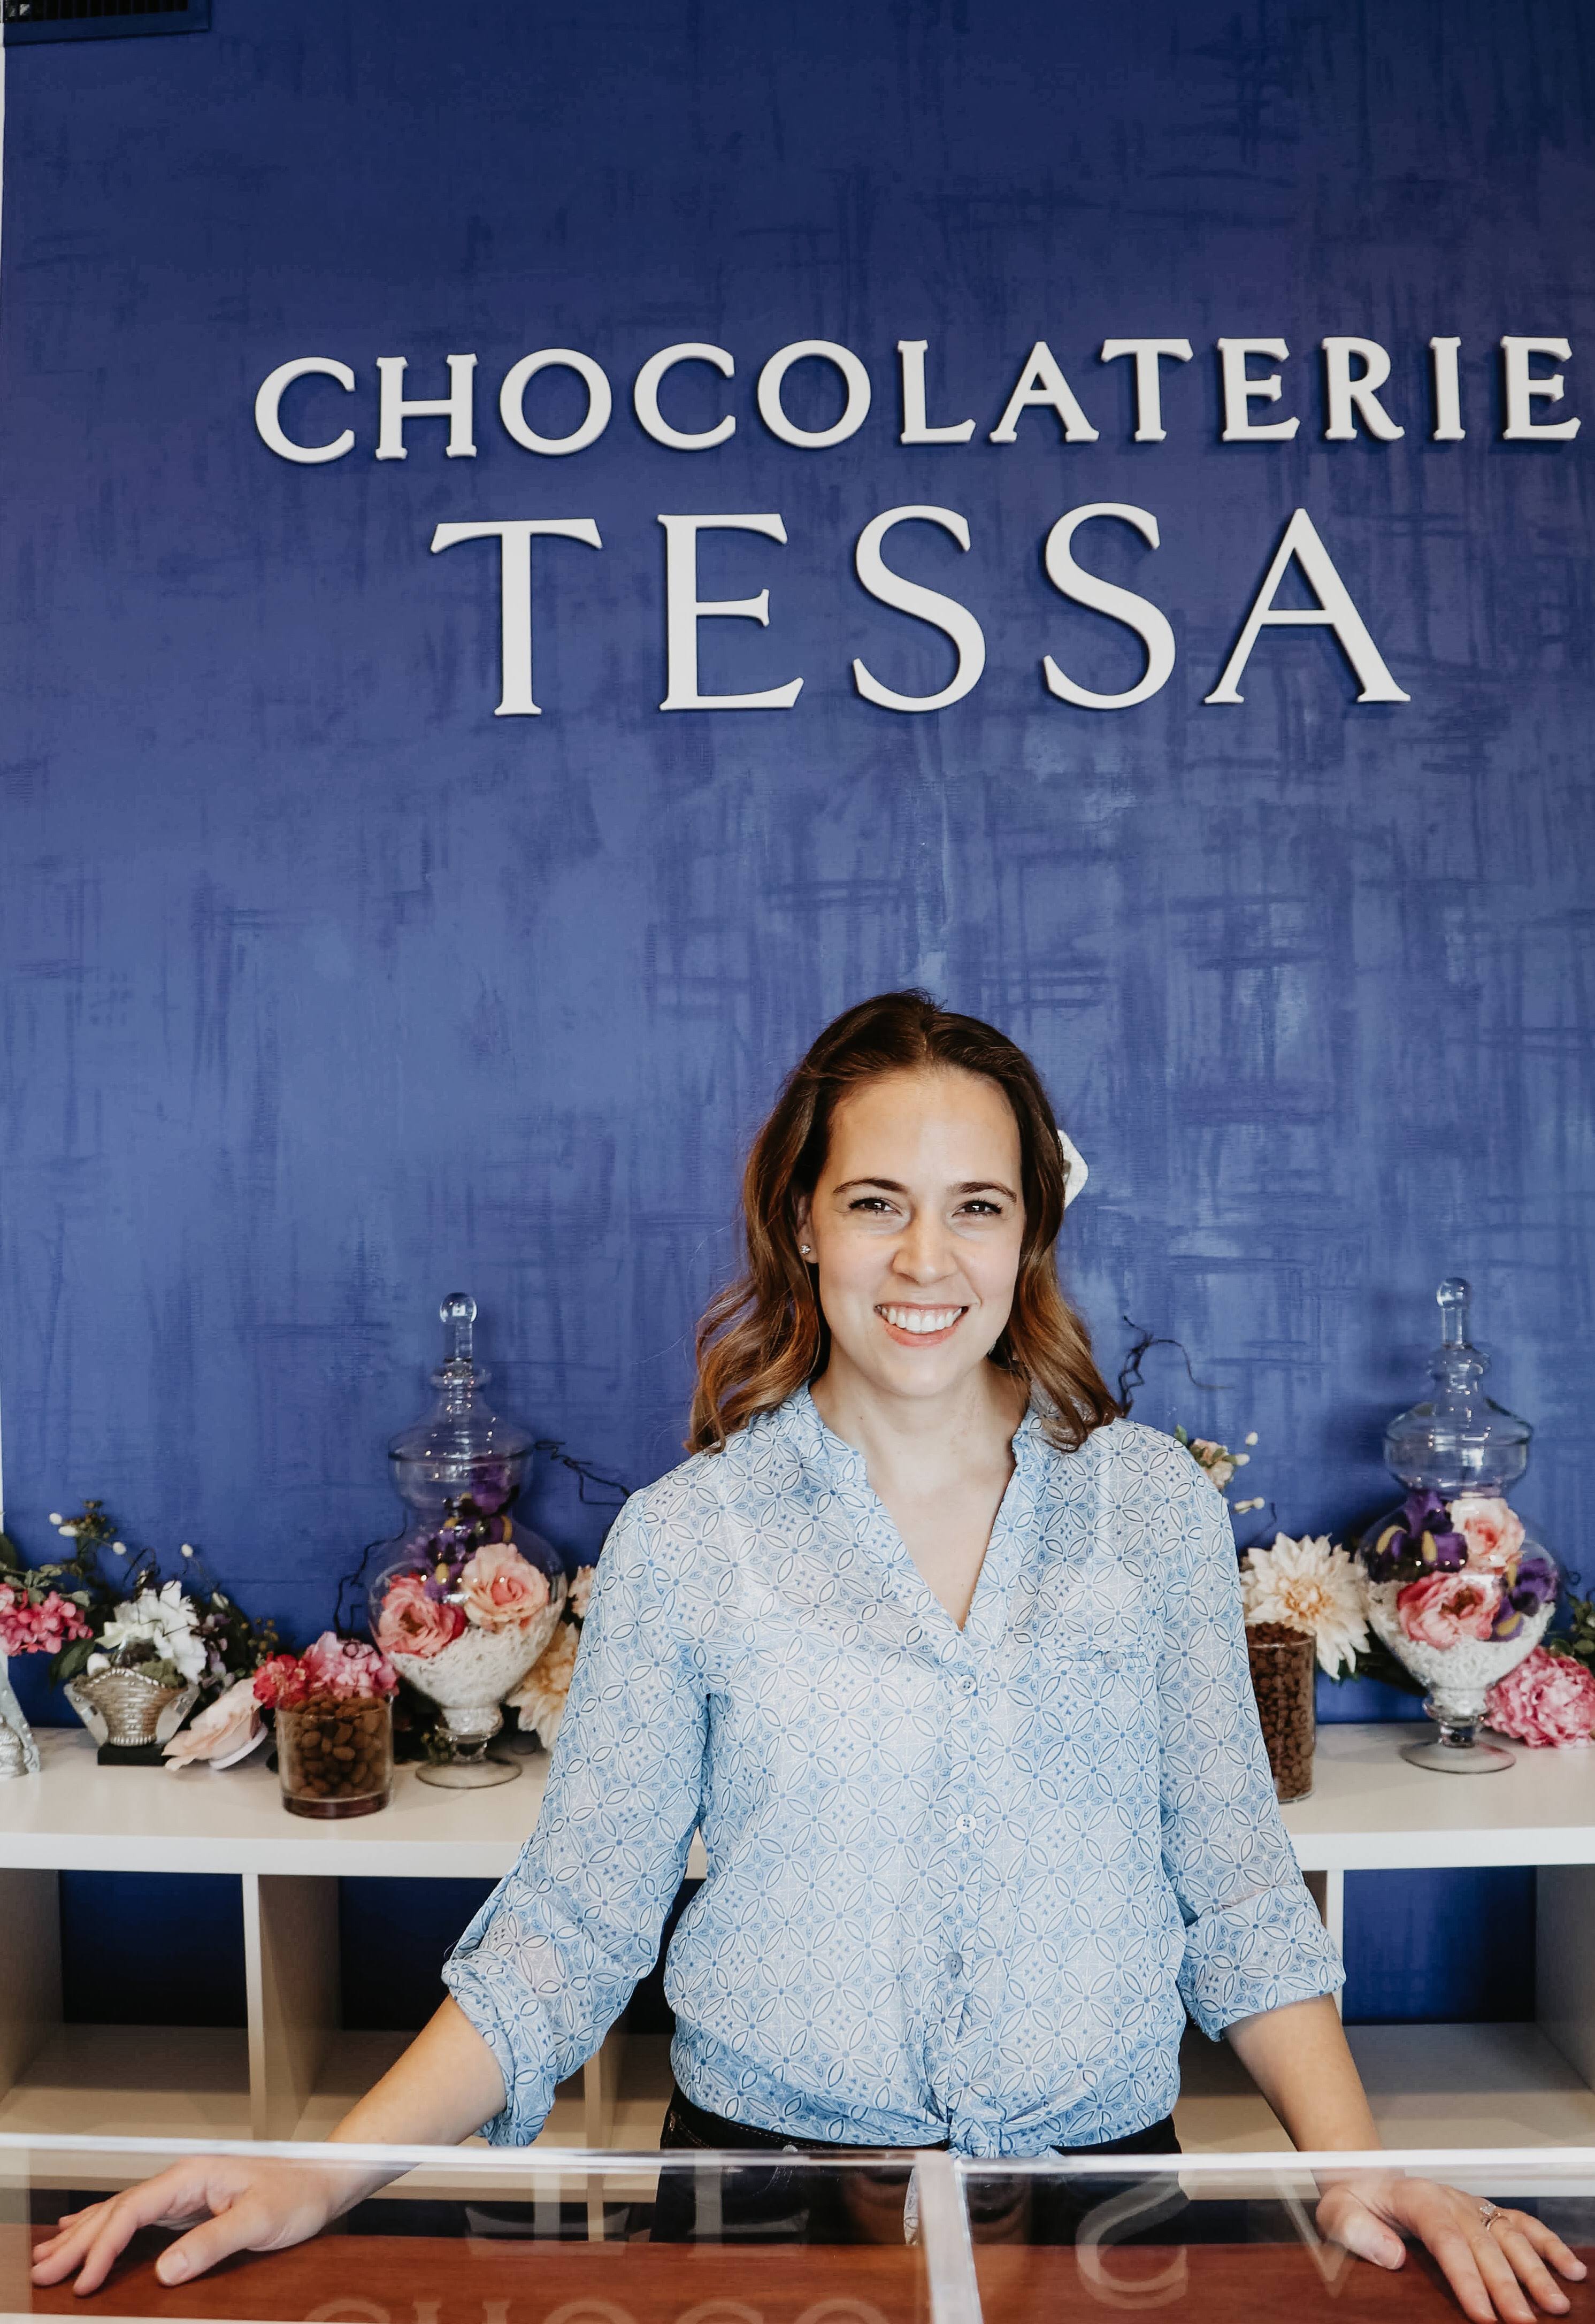 Meet the Woman Behind Chocolaterie Tessa